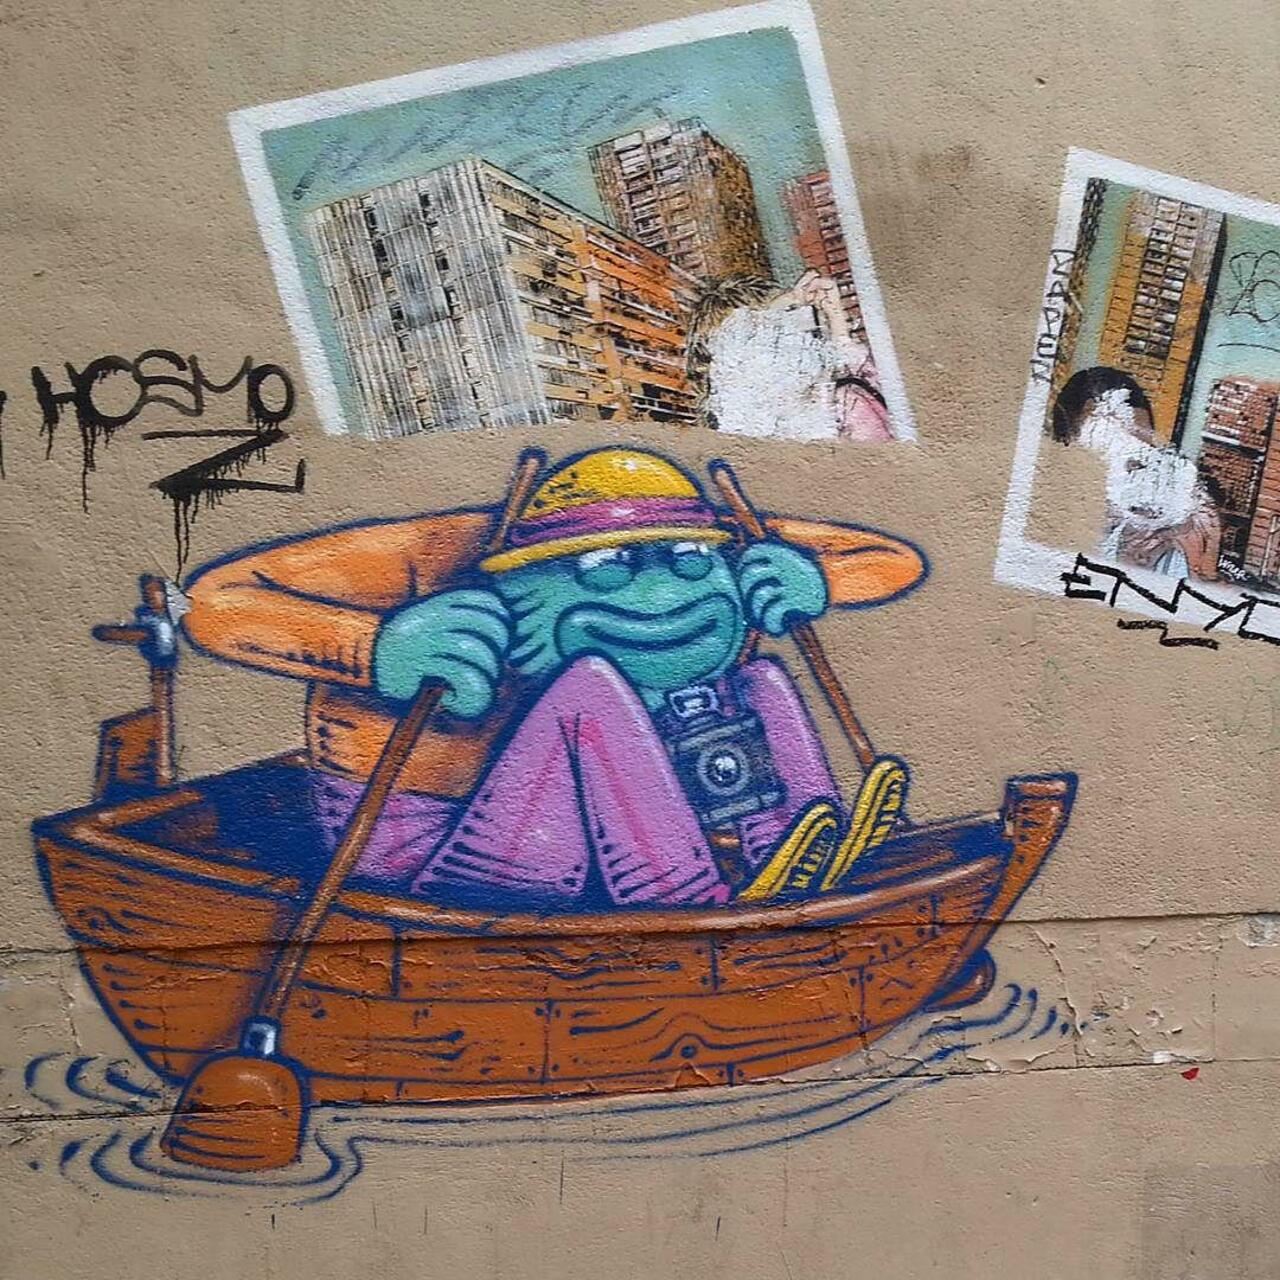 #Paris #graffiti photo by @fotoflaneuse http://ift.tt/1GzPnqC #StreetArt http://t.co/BLTpOnzm6z